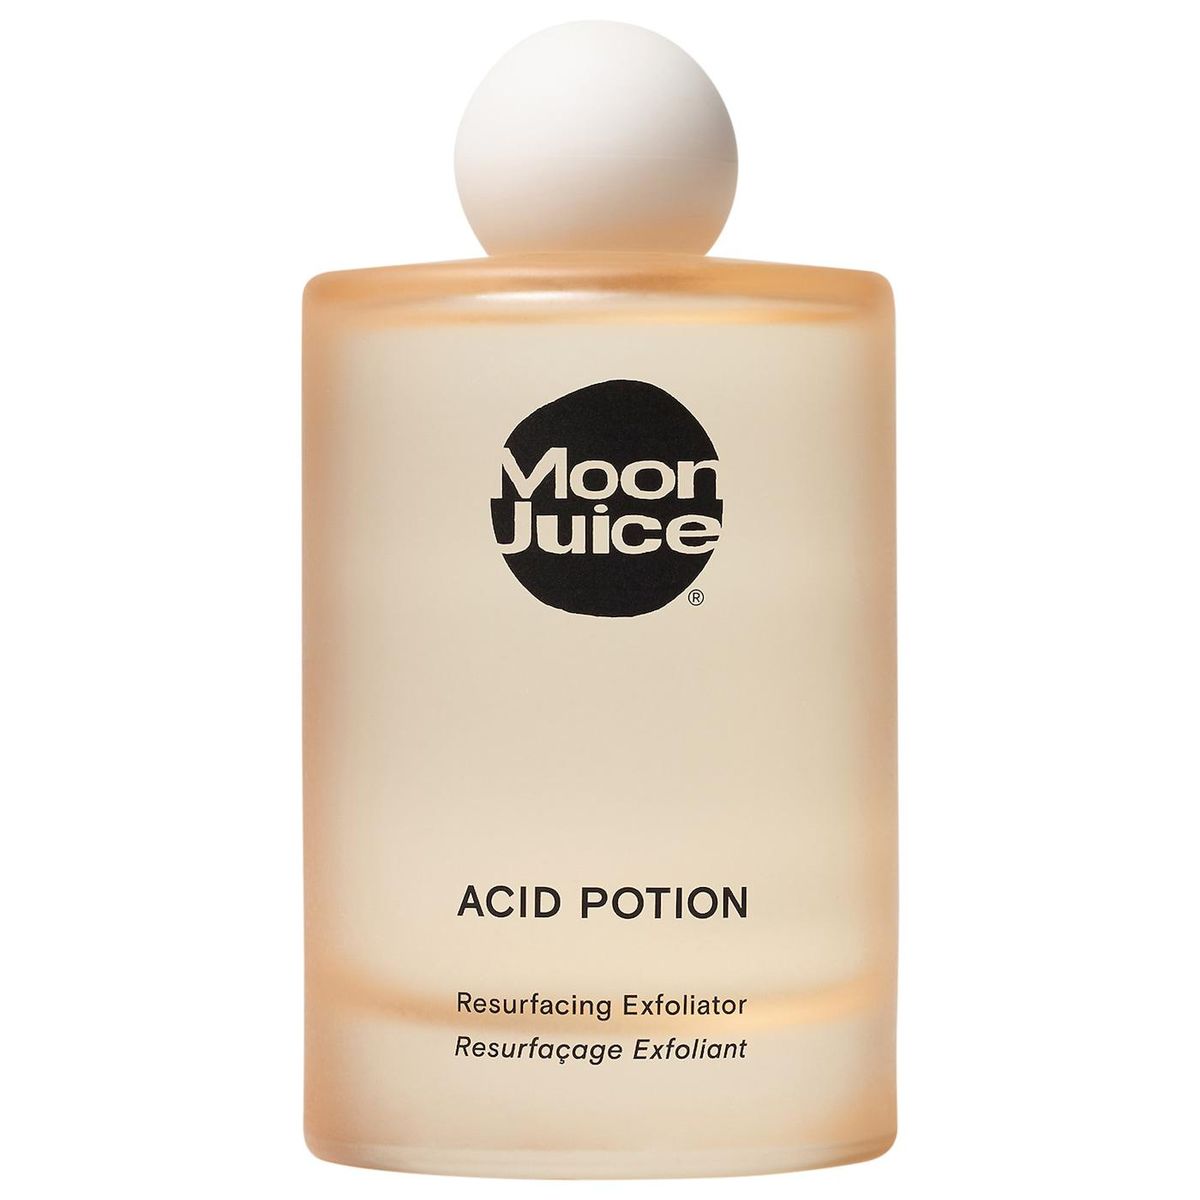 moon juice acid potion aha and bha resurfacing exfoliator